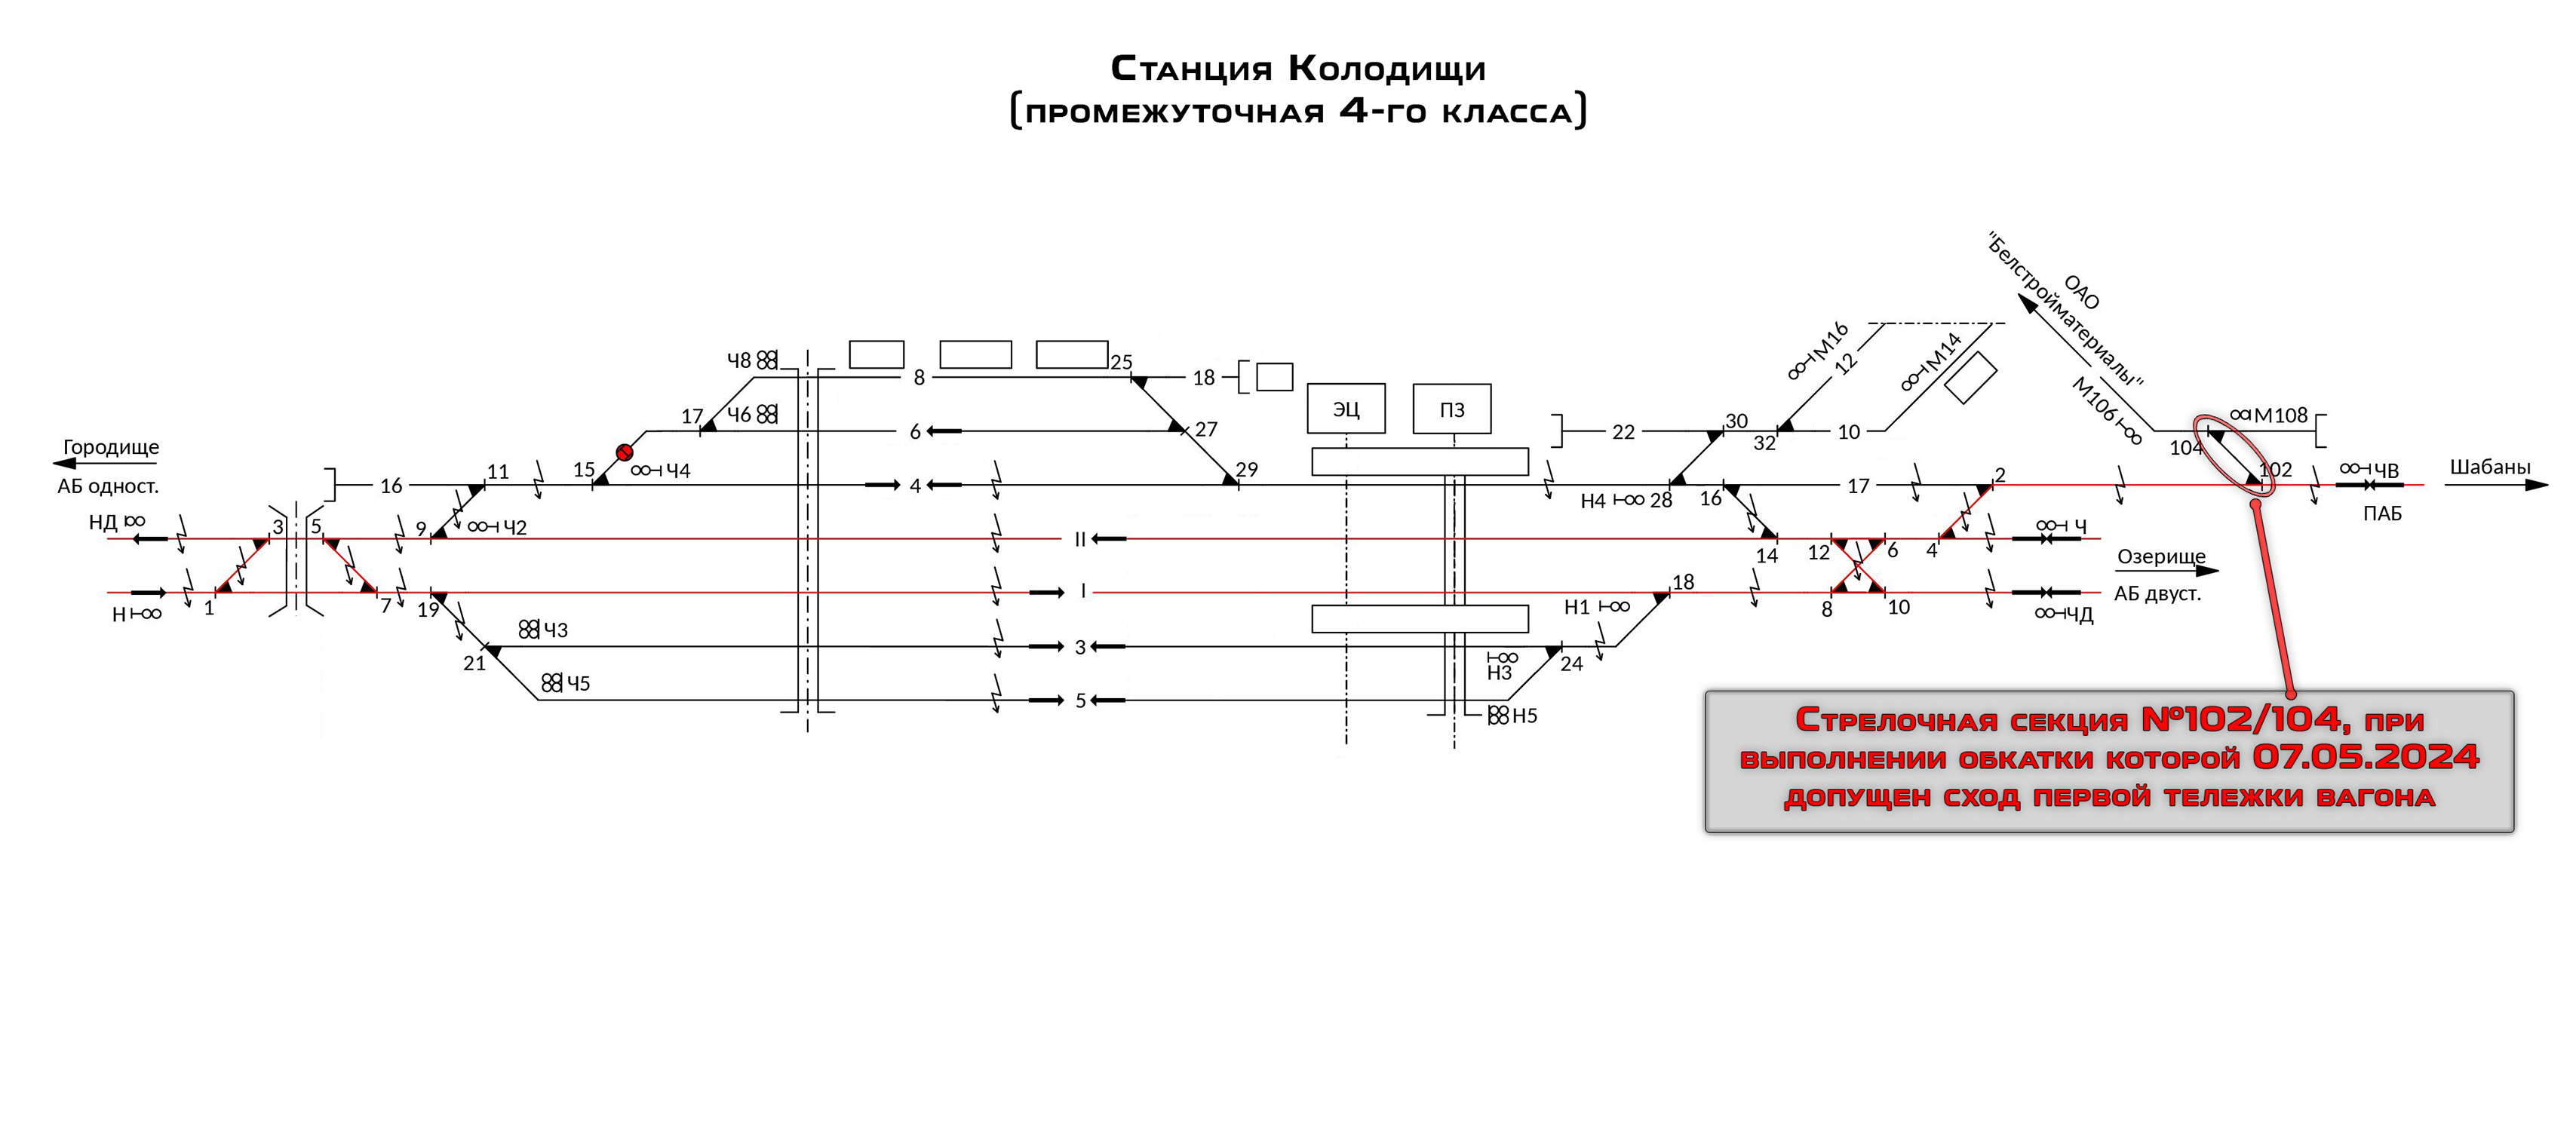 Схема станции Колодищи и место схода вагона 07.05.2024